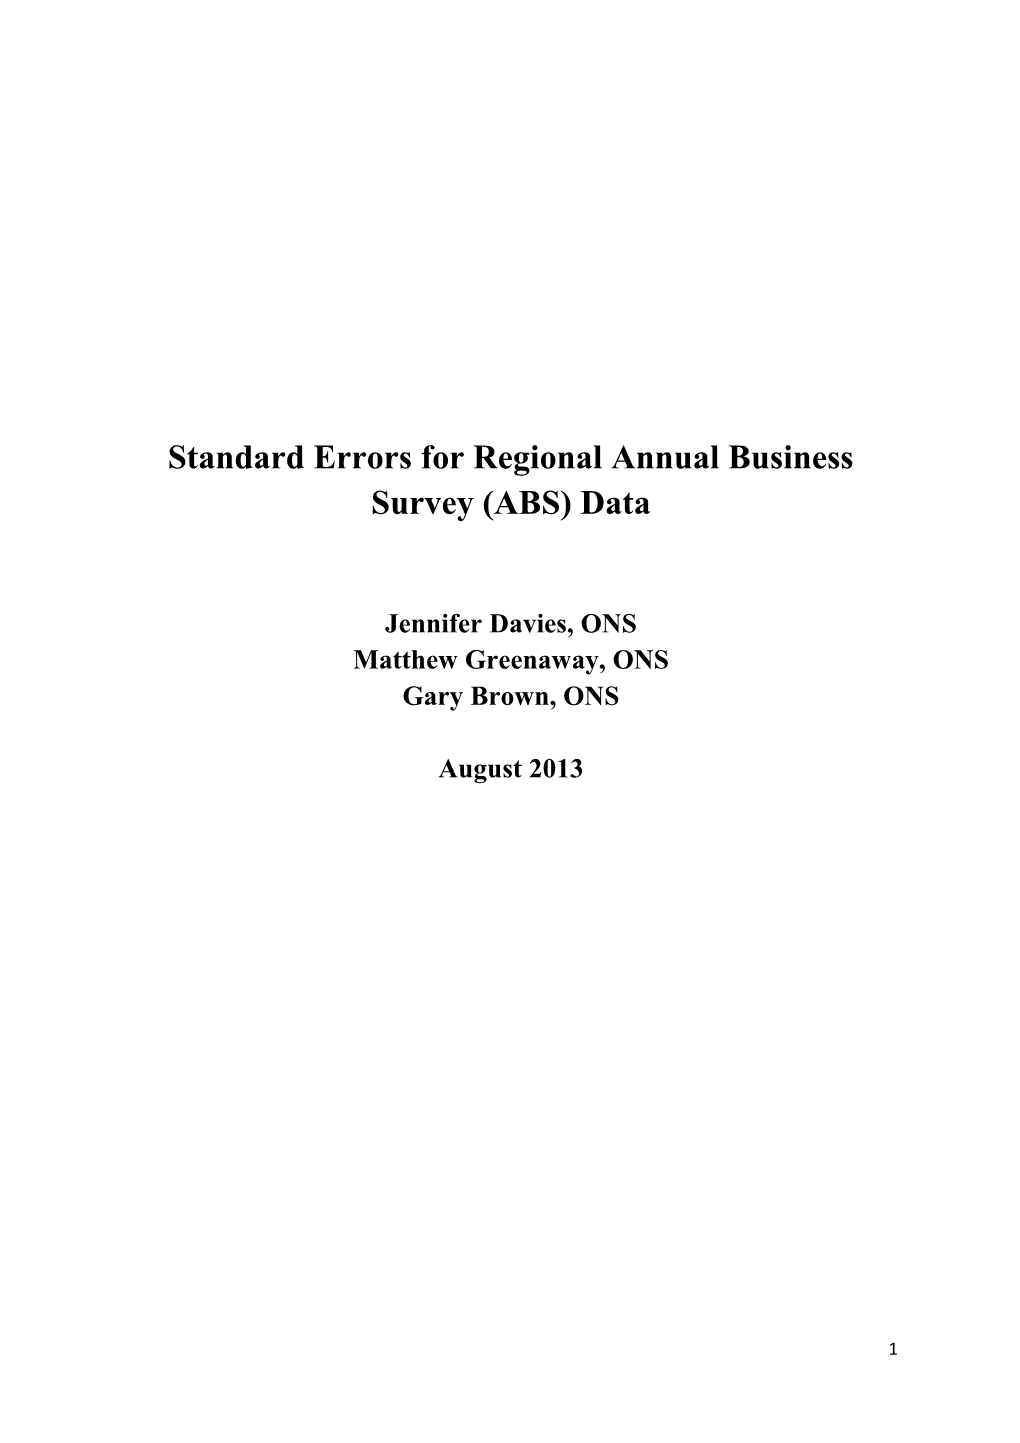 Standard Errors for Regional Annual Business Survey (ABS) Data